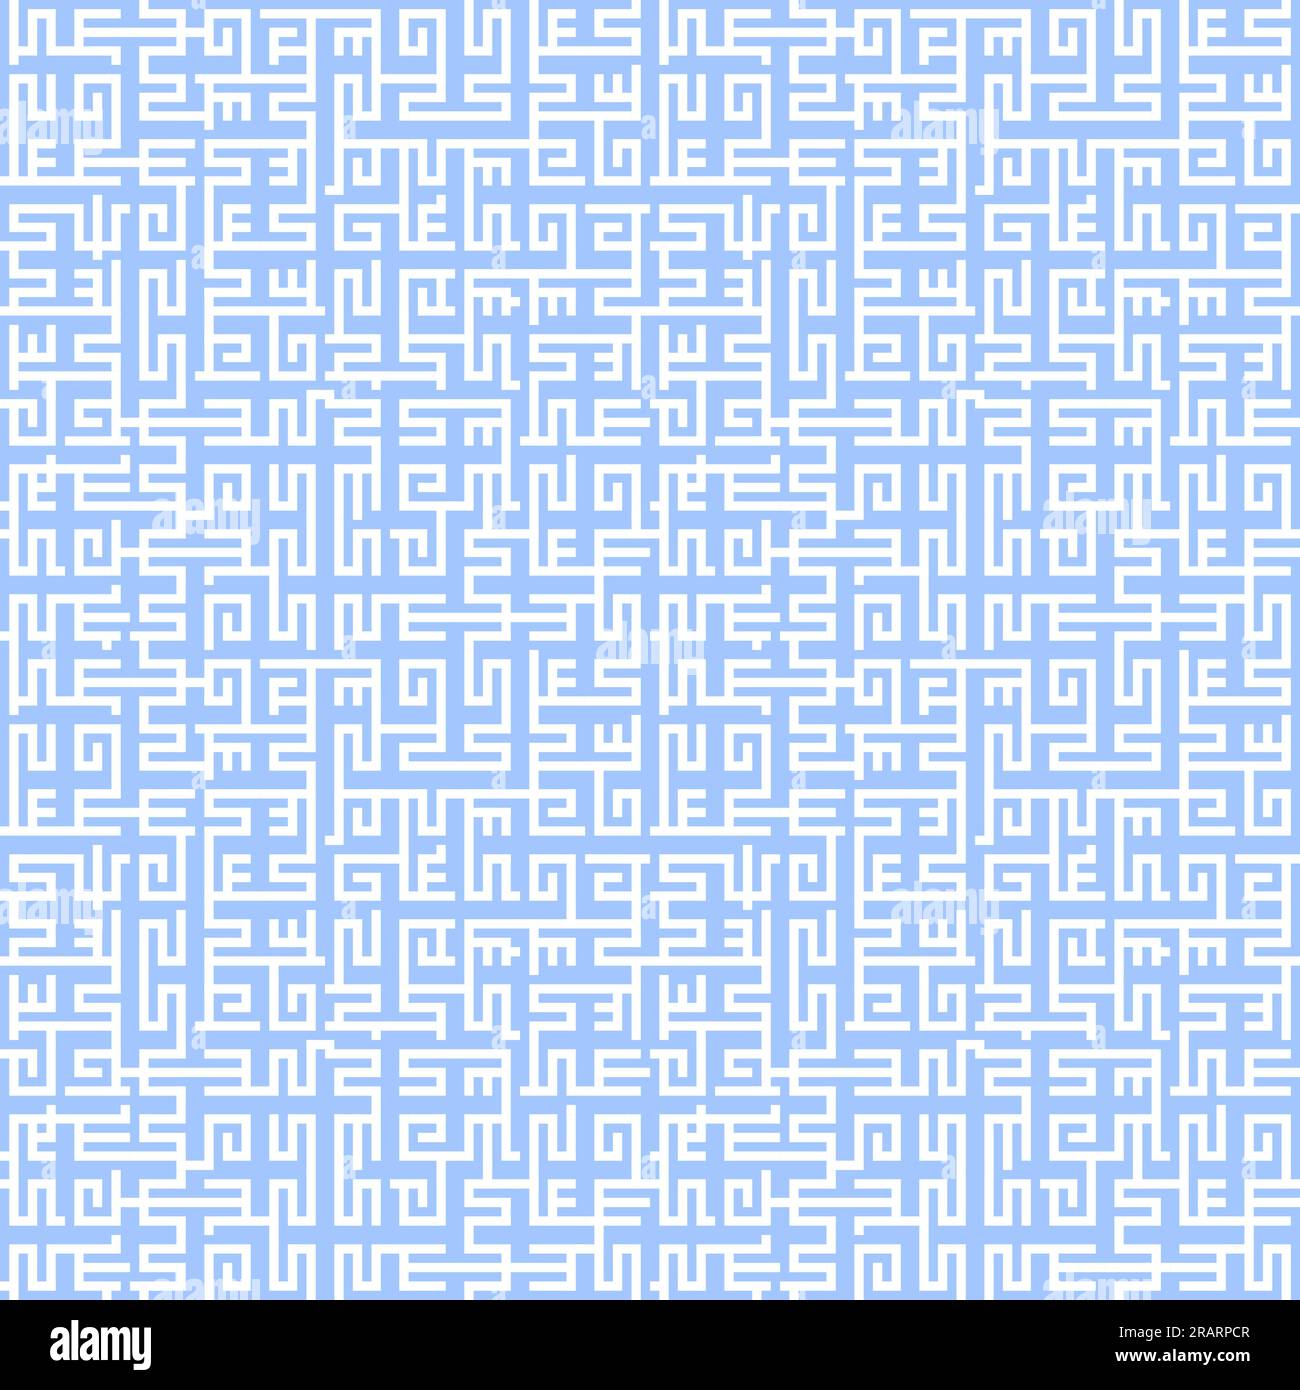 Greek key maze seamless fashion pattern. Ancient Mediterranean style fabric print texture. Stock Vector